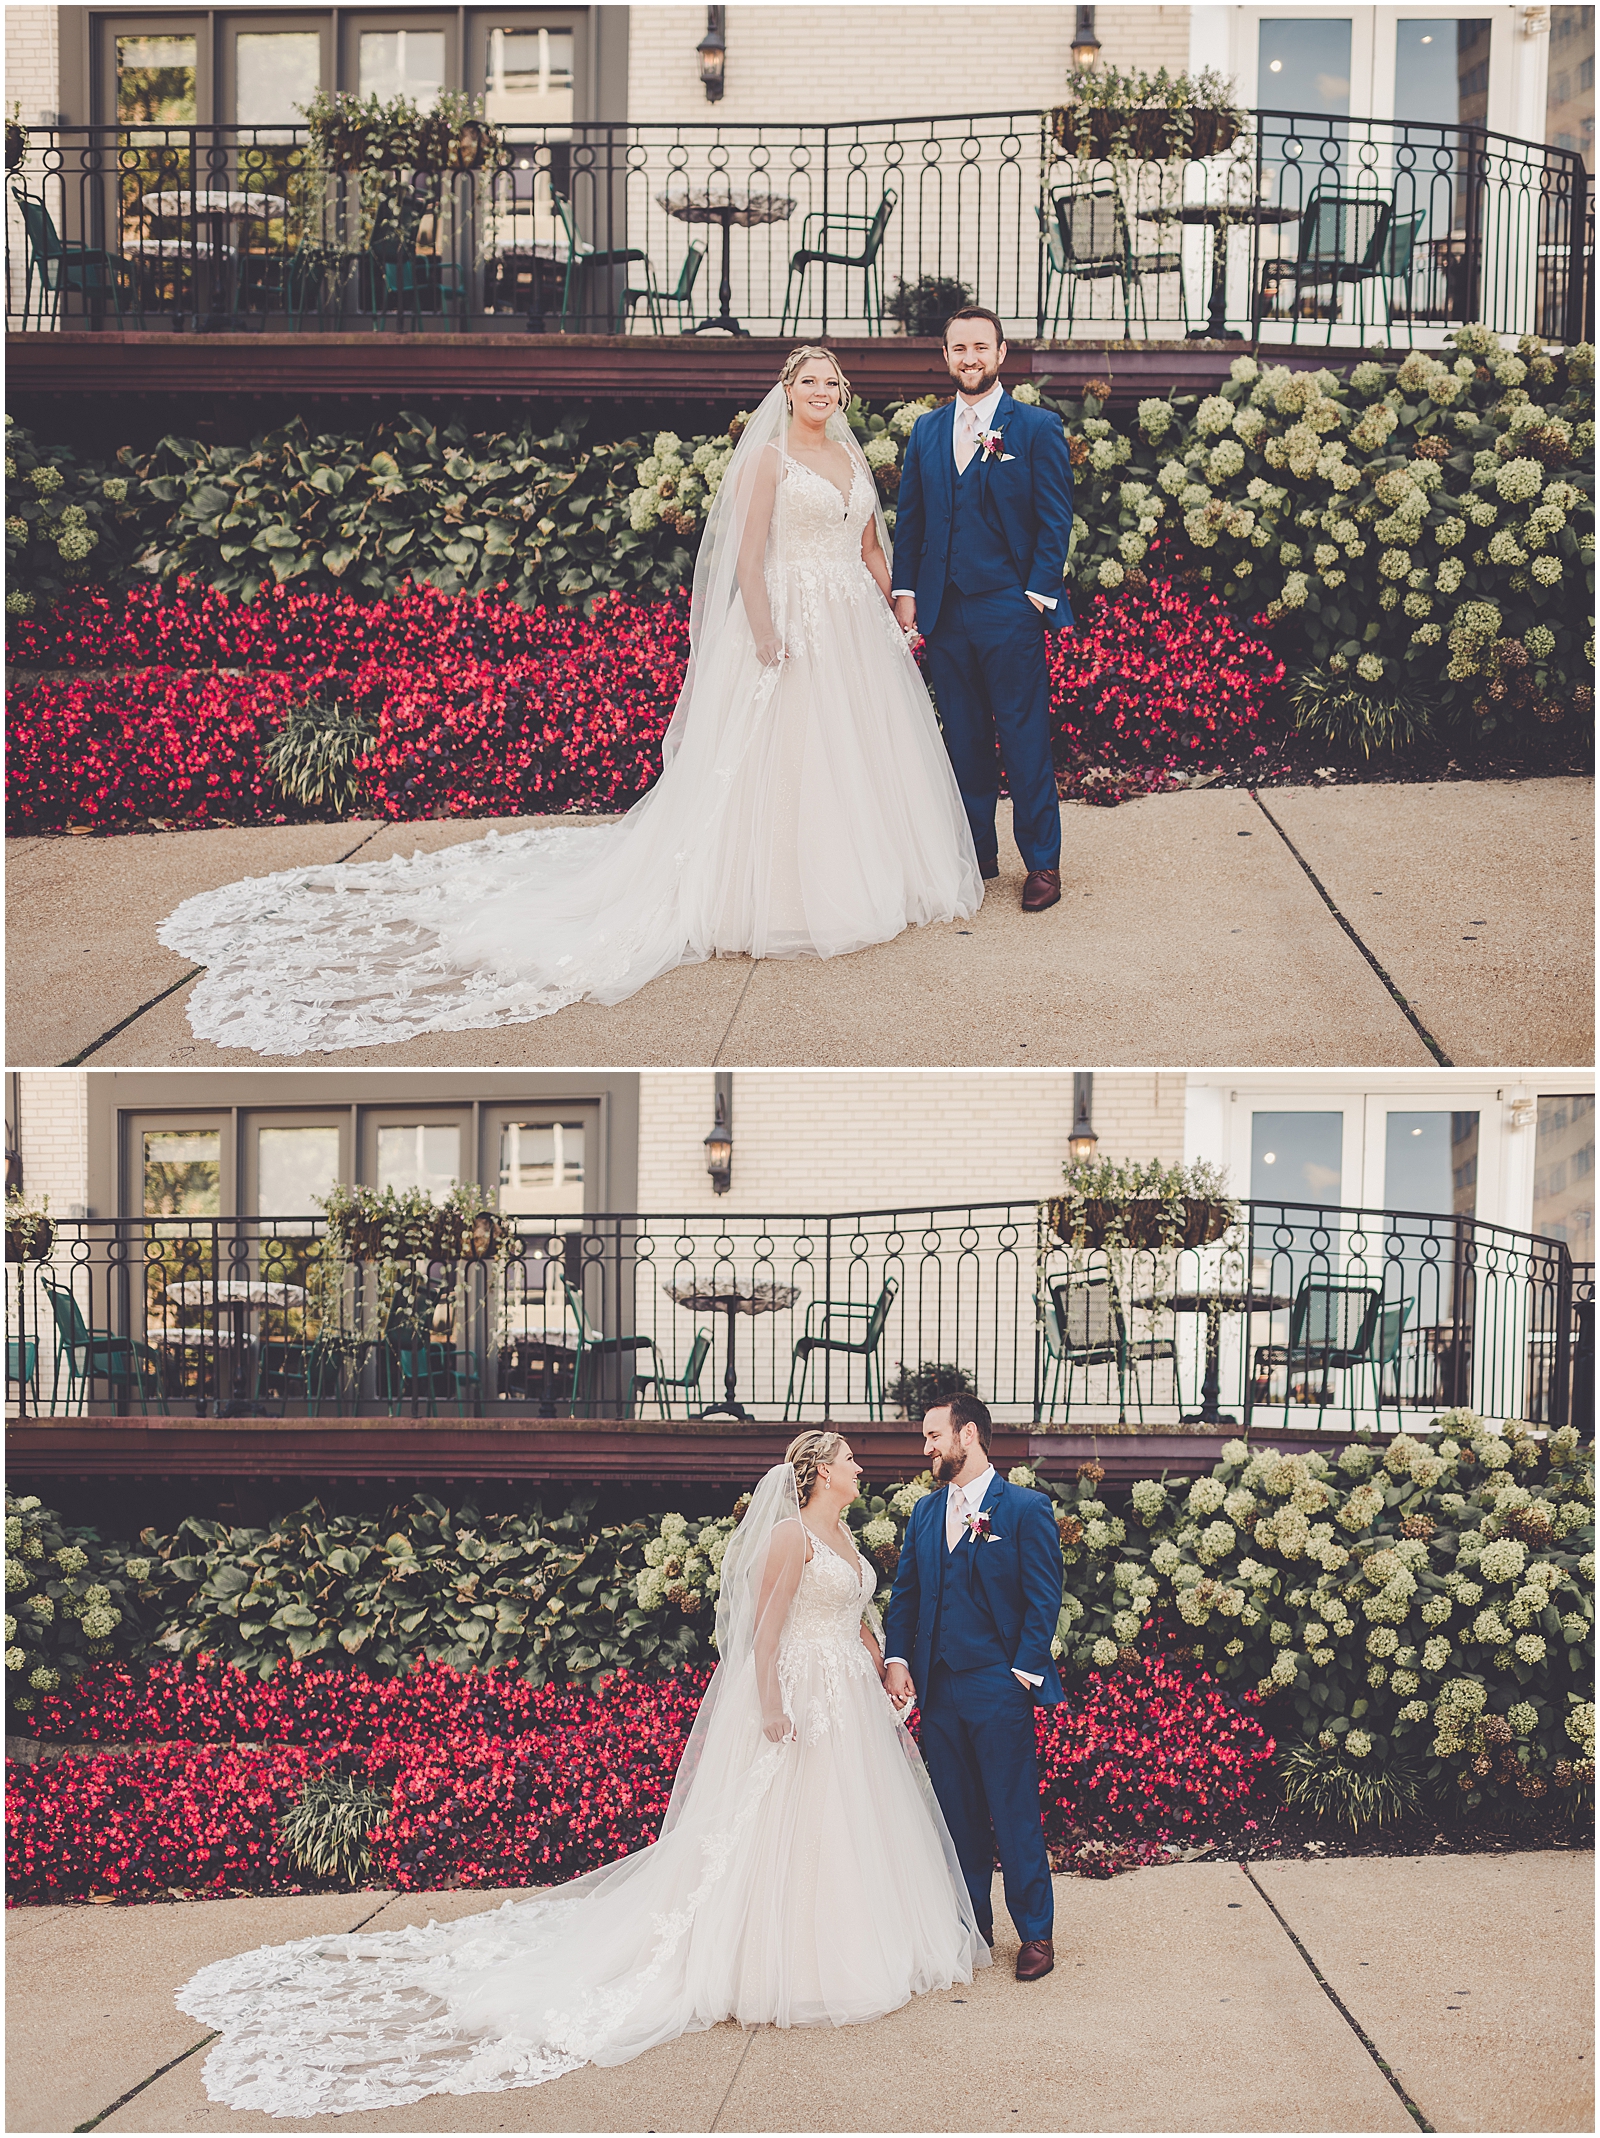 Catherine & Garrett's Anheuser-Busch and Clayton Plaza Hotel wedding in St. Louis with Chicagoland photographer Kara Evans Photographer.